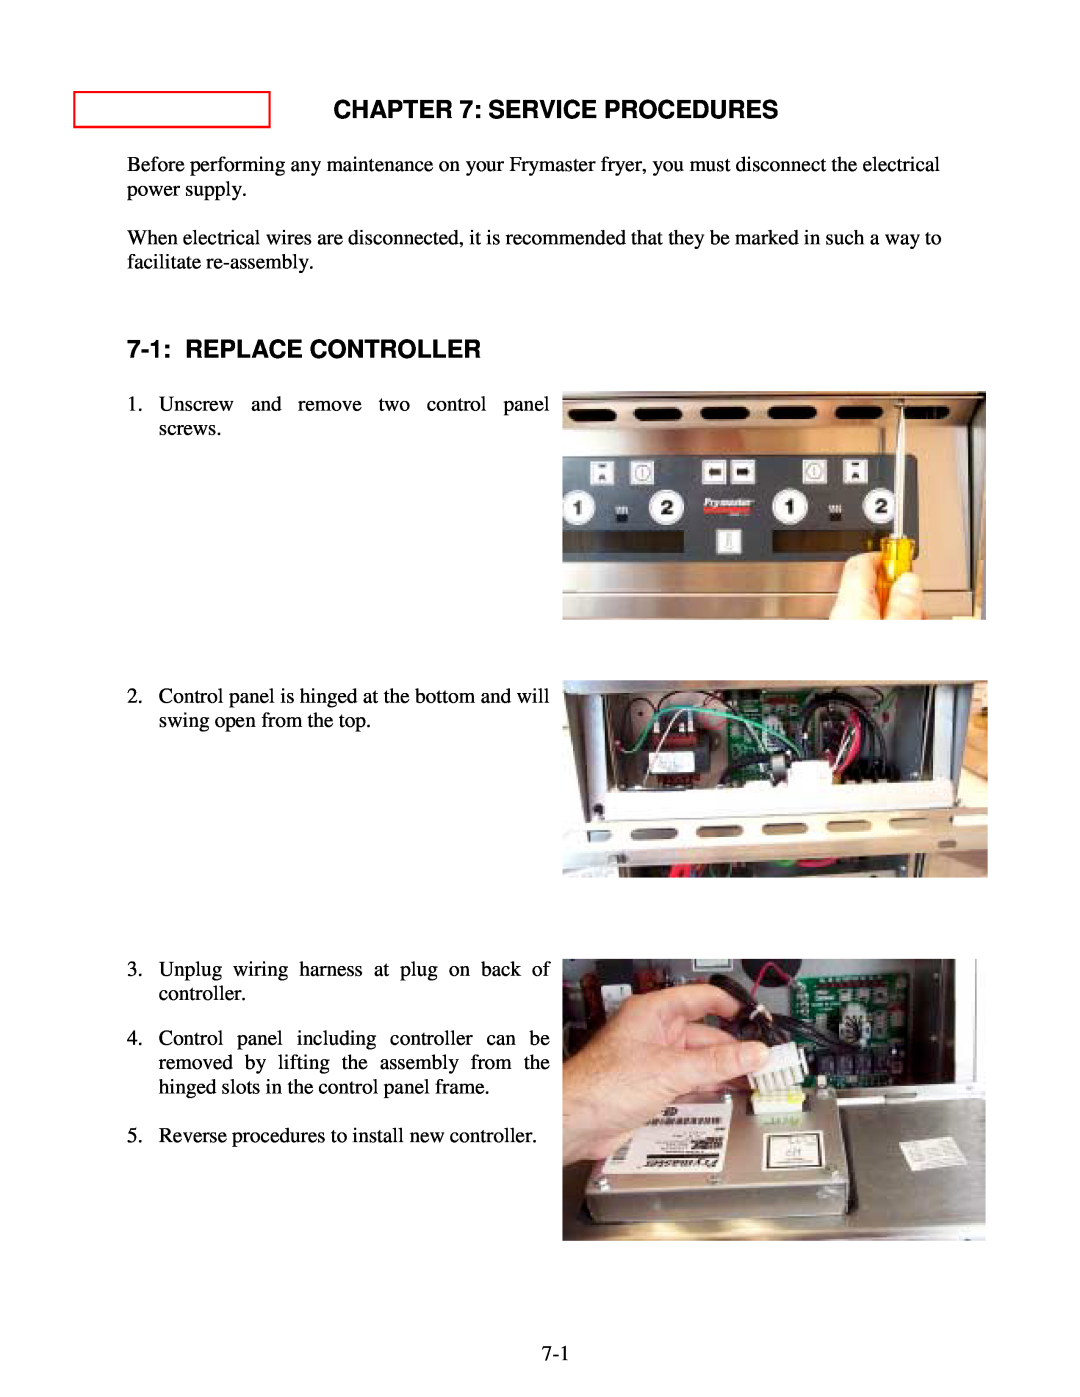 Frymaster H14 Series service manual Service Procedures, Replace Controller 